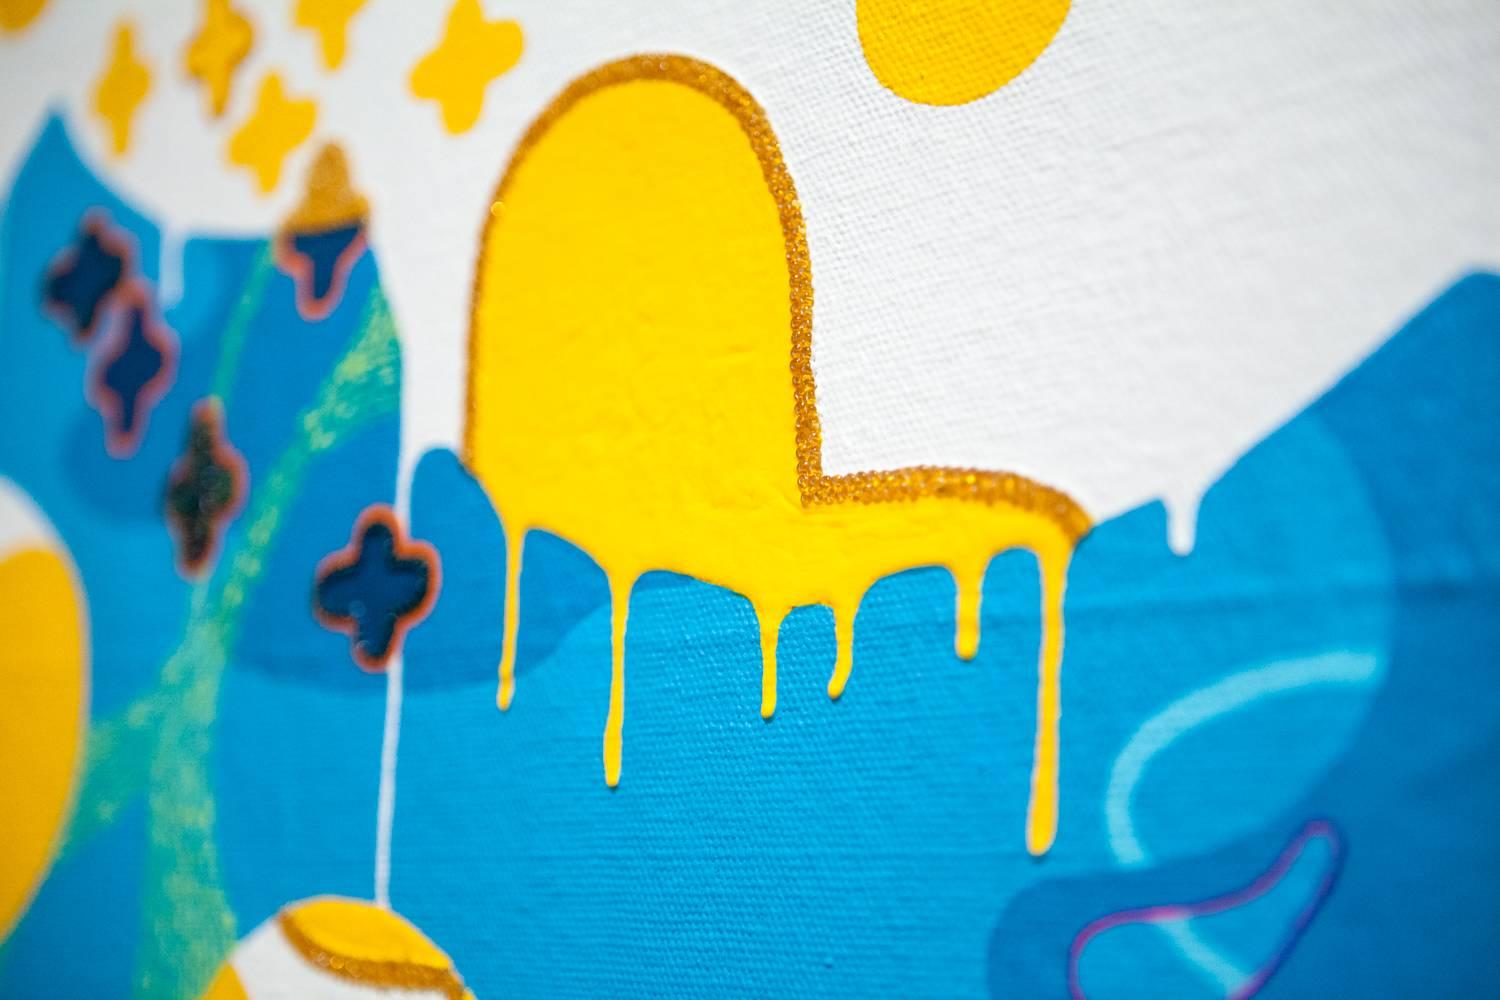 Hot Spot - Yellow Abstract Painting by Kelly Kozma